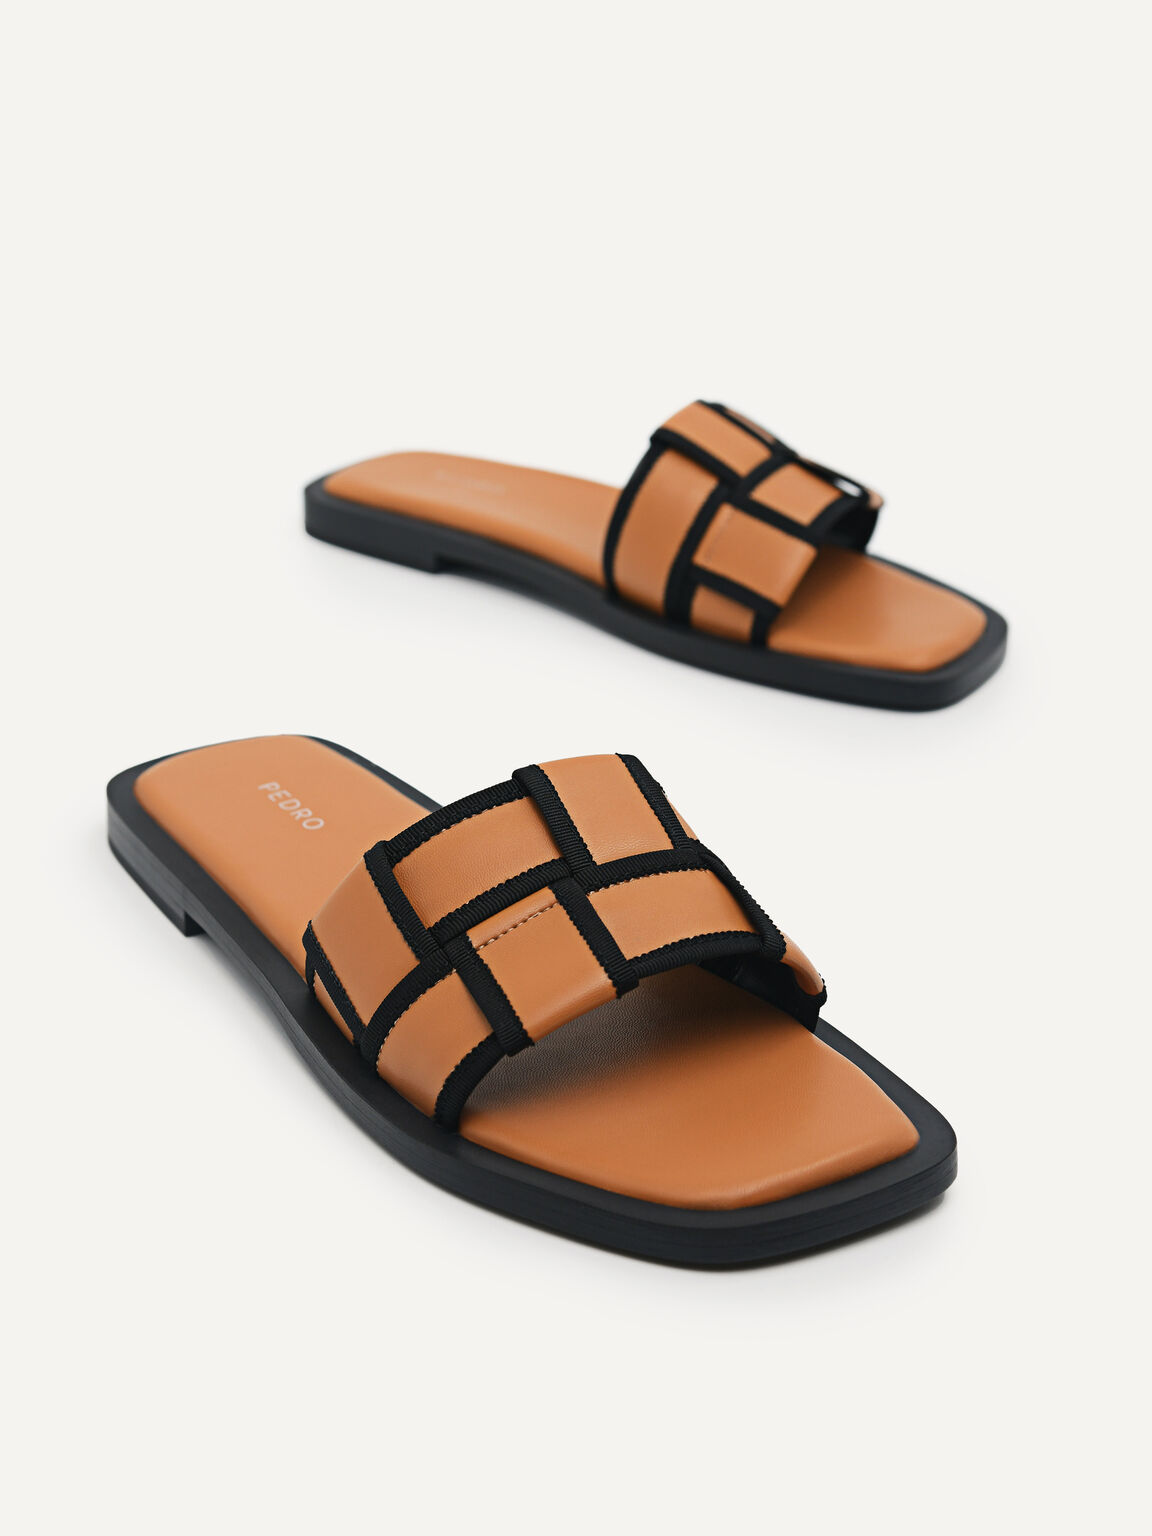 Woven Sandals, Camel